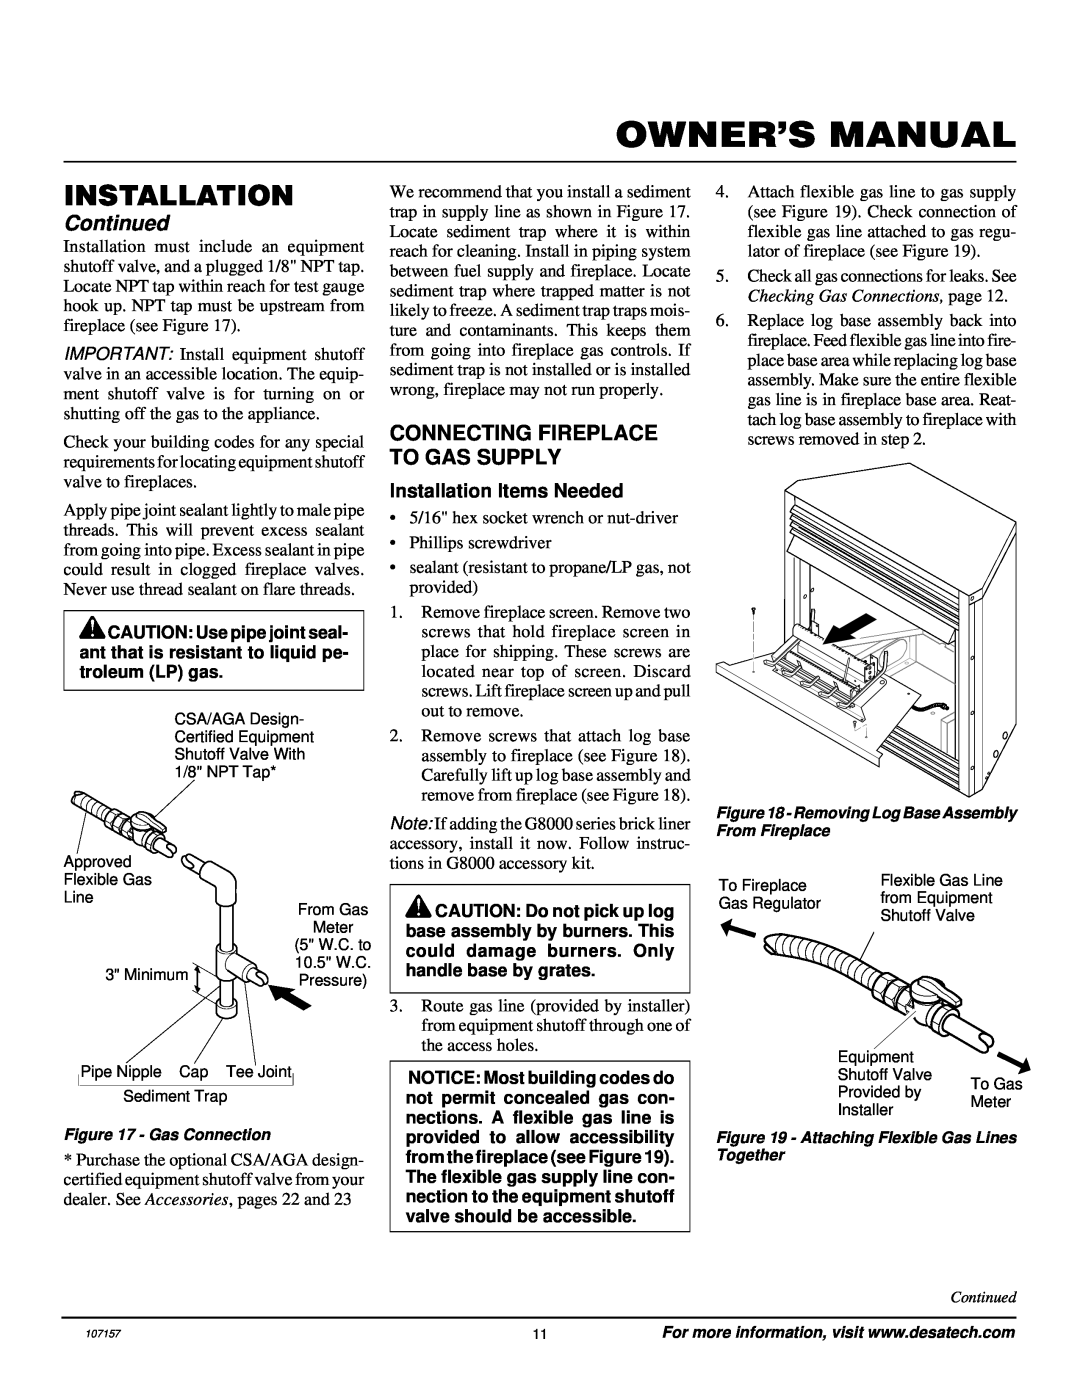 Vanguard Heating VSGF28NTC, VSGF28NVA installation manual Connecting Fireplace To Gas Supply, Installation, Continued 